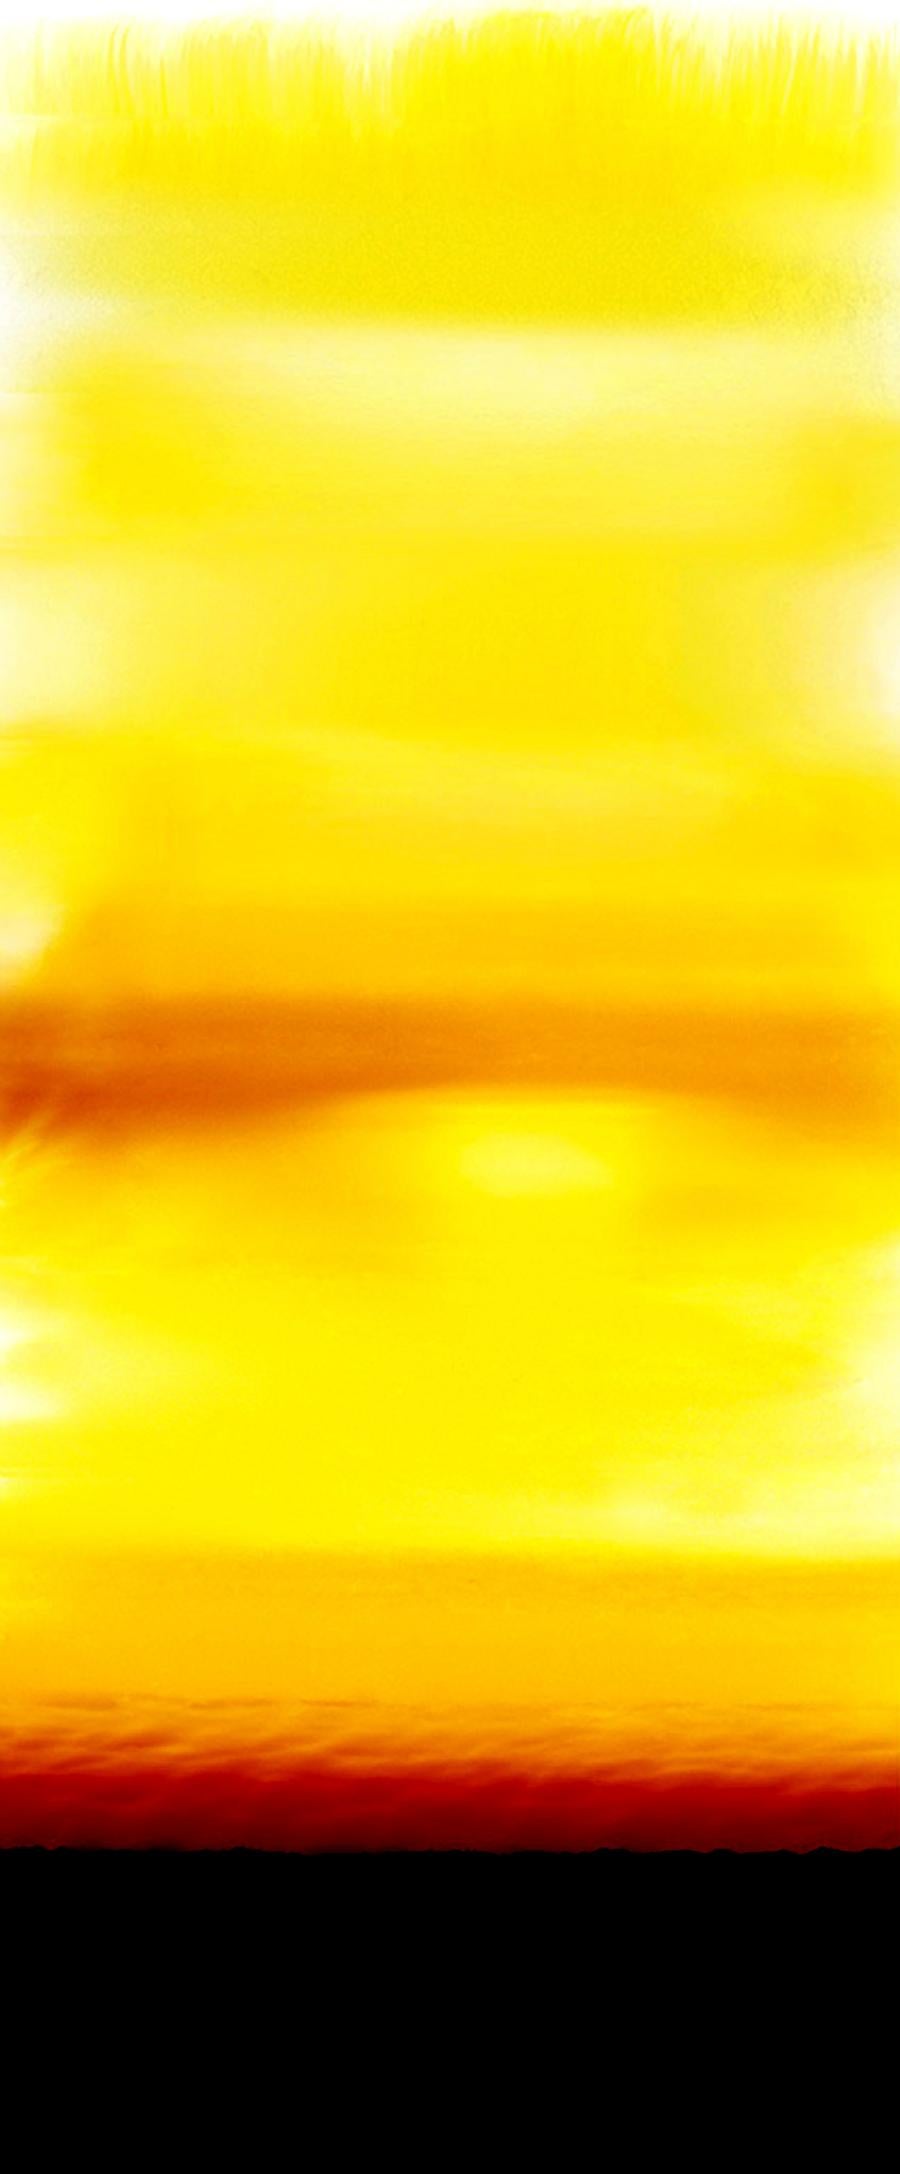 Silvio Wolf Color Photograph - Horizon G, abstract photography, yellow and black